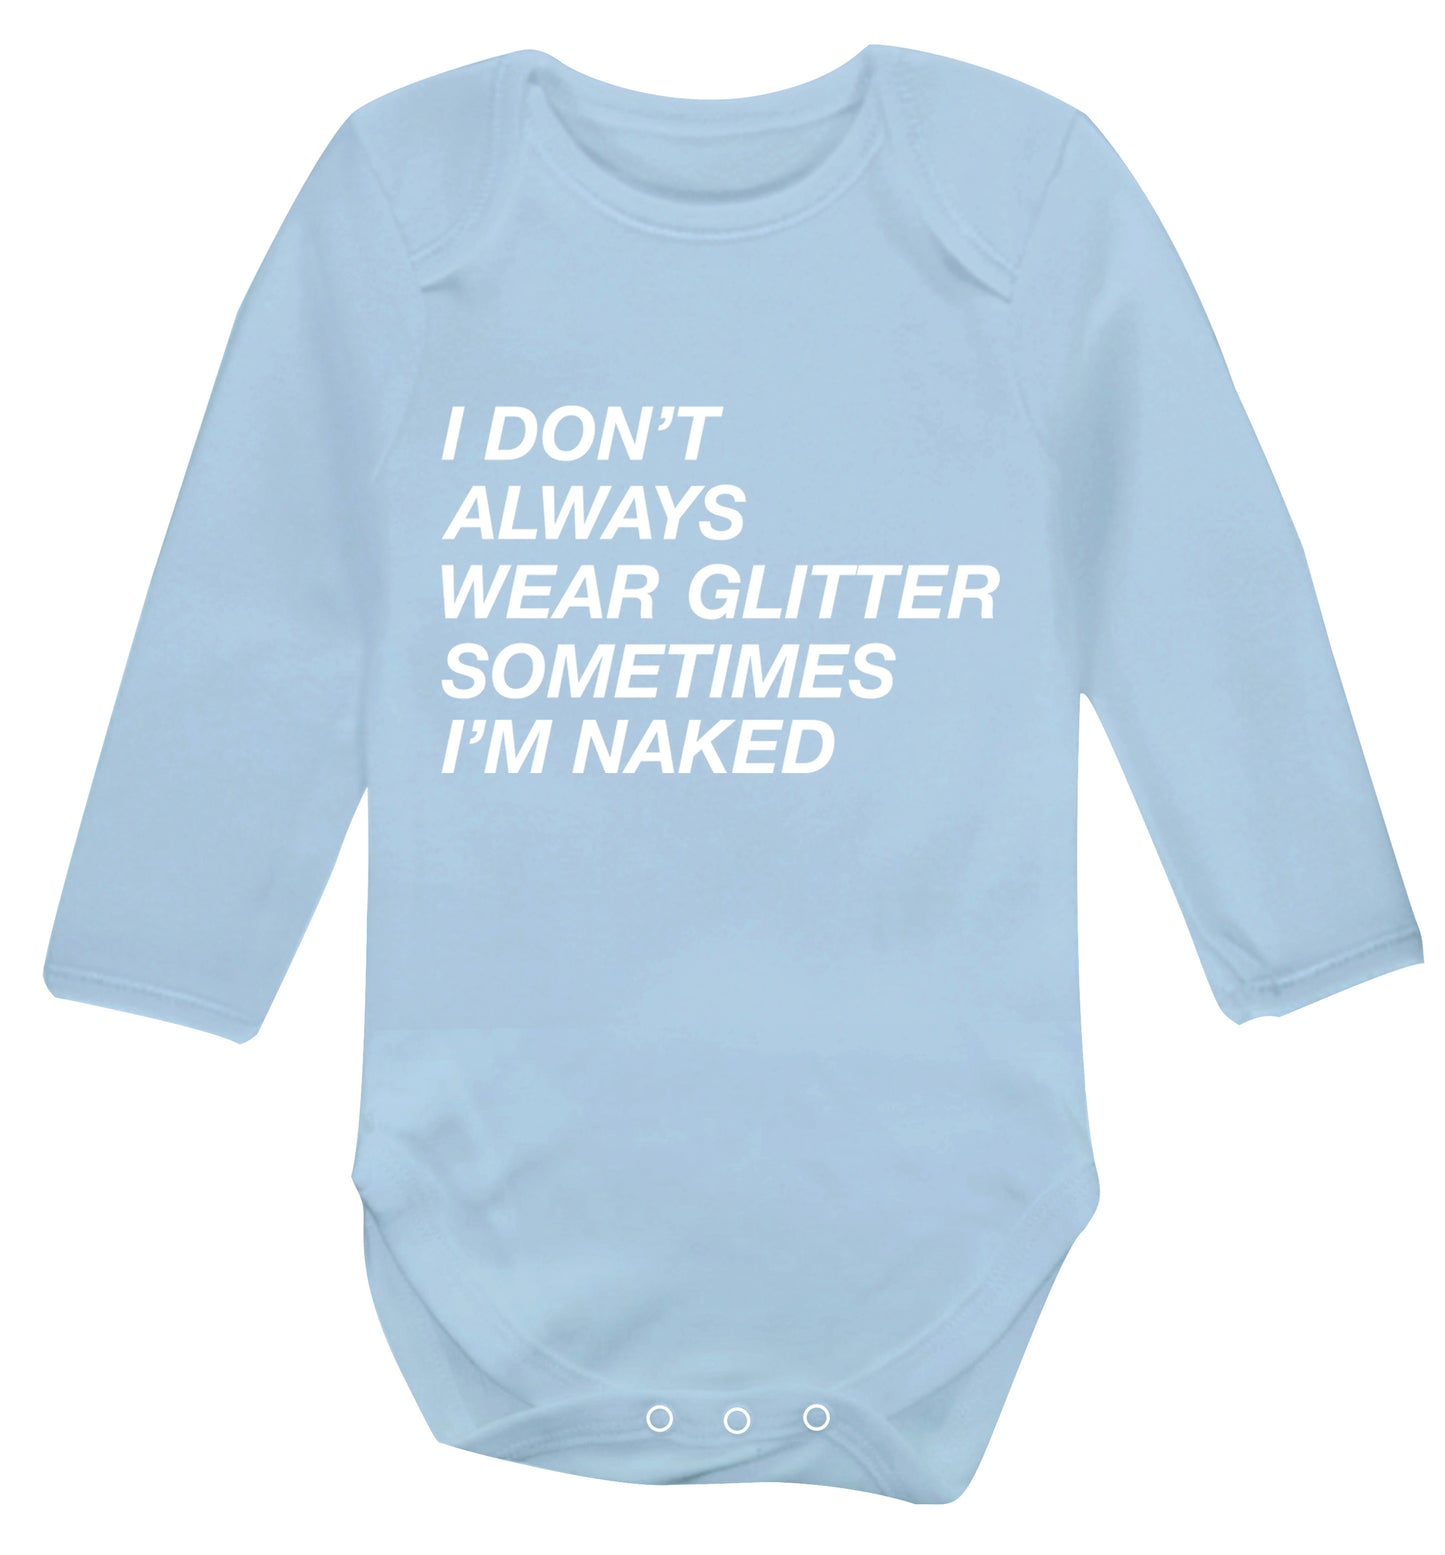 I don't always wear glitter sometimes I'm naked! Baby Vest long sleeved pale blue 6-12 months